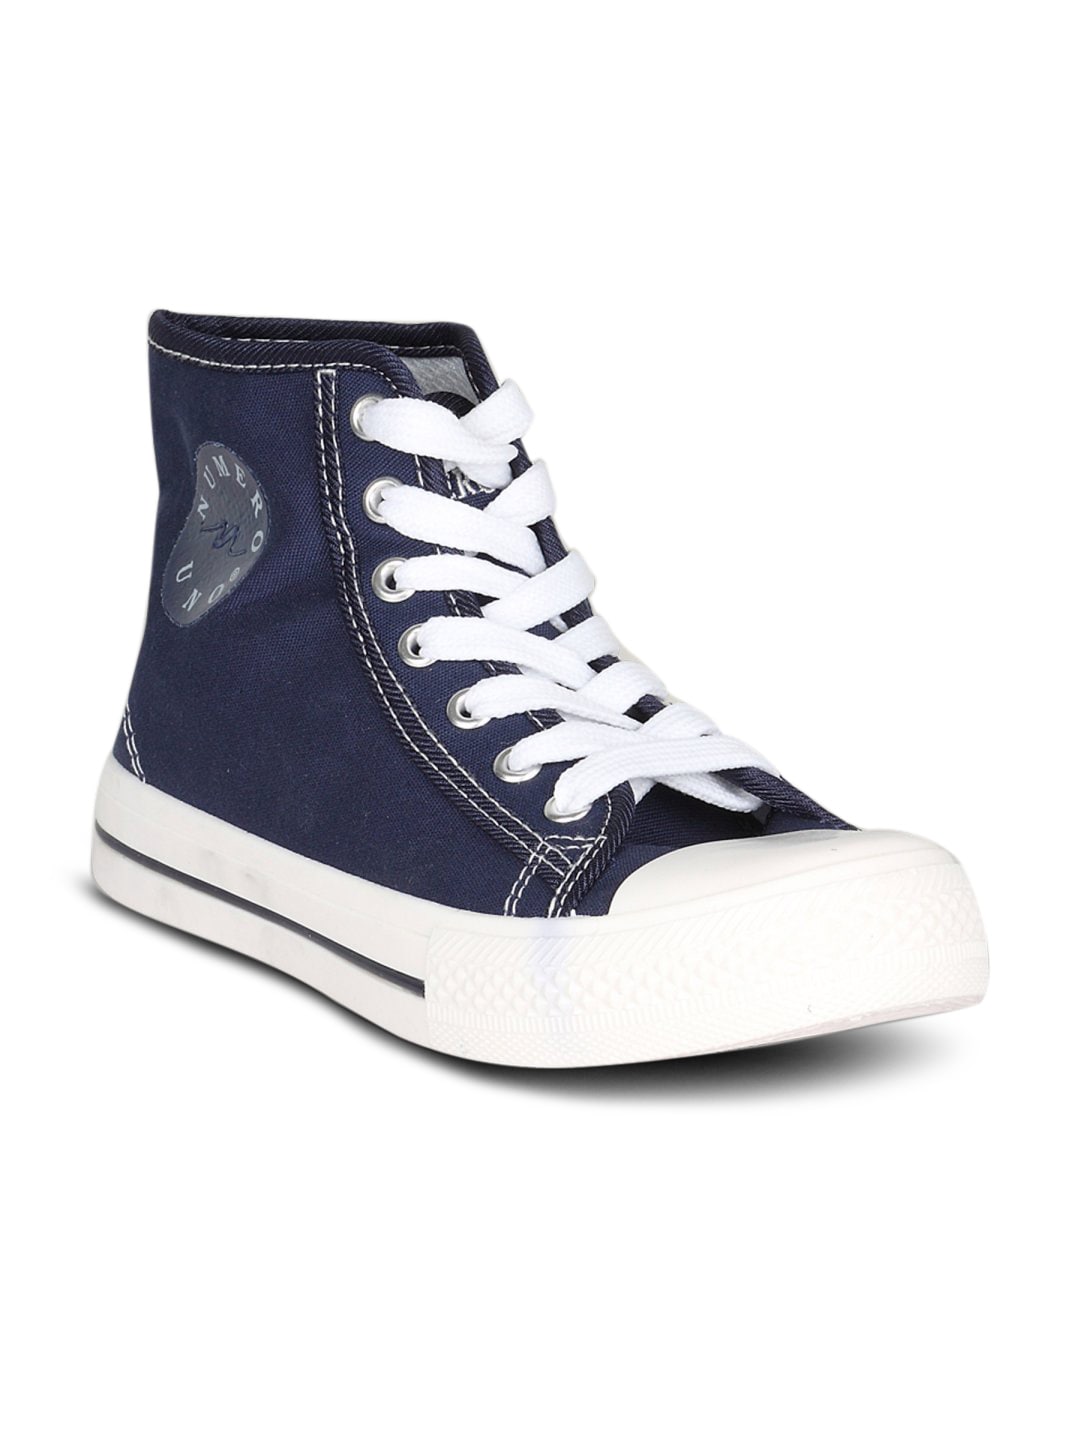 Numero Uno Men's Dark Blue Canvas Shoe